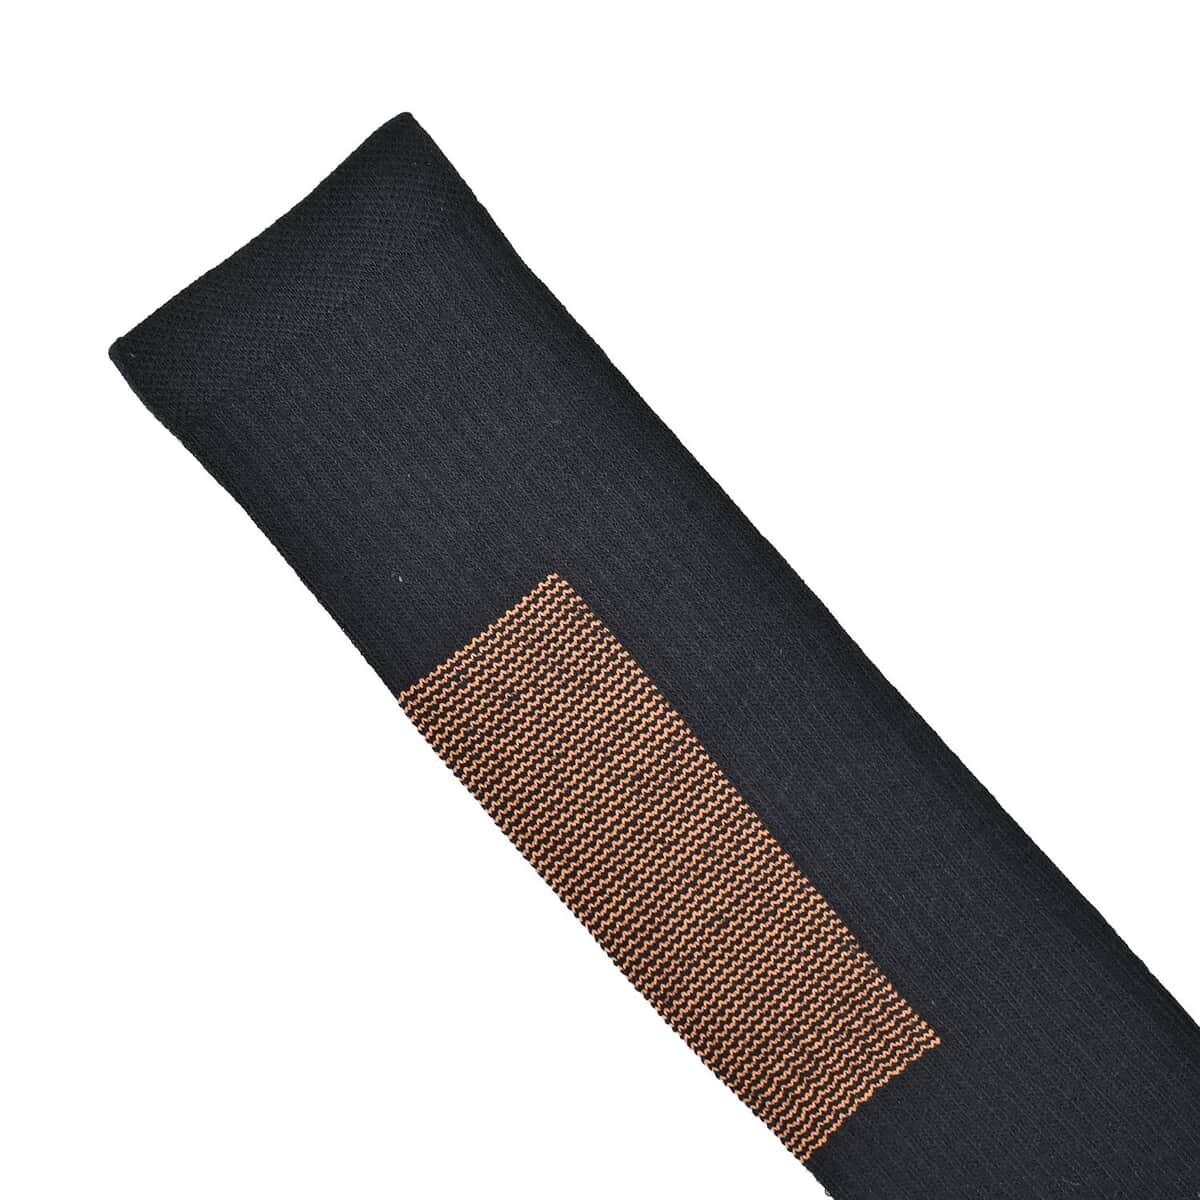 Set of 4 Pairs Knee Length Copper Infused Compression Socks - Black (L/XL) image number 3